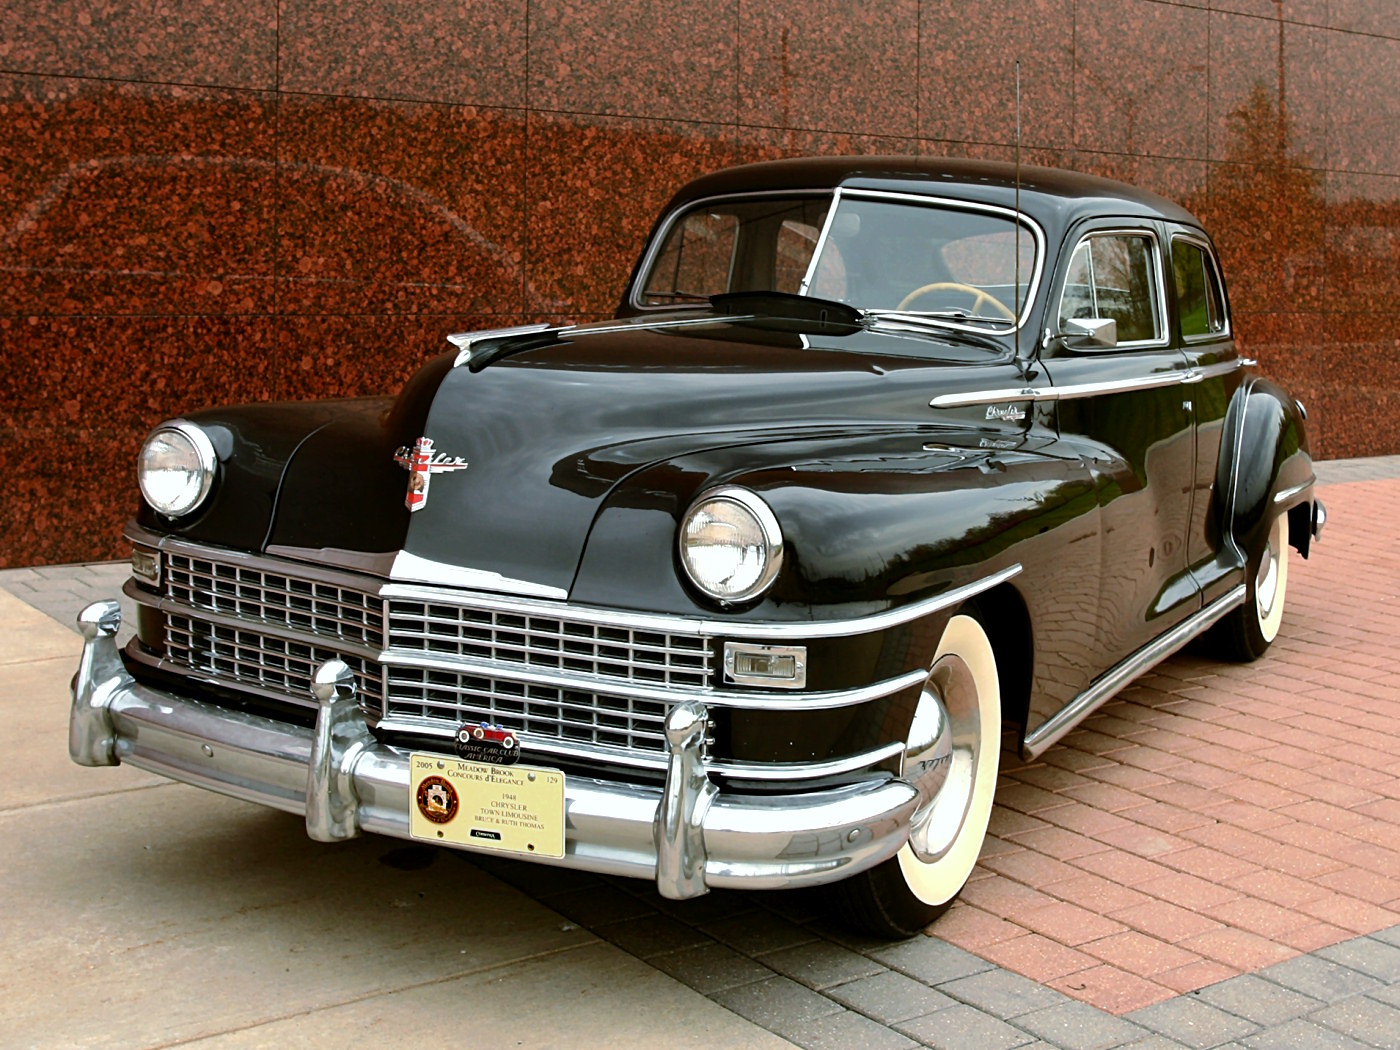 1948 Chrysler car